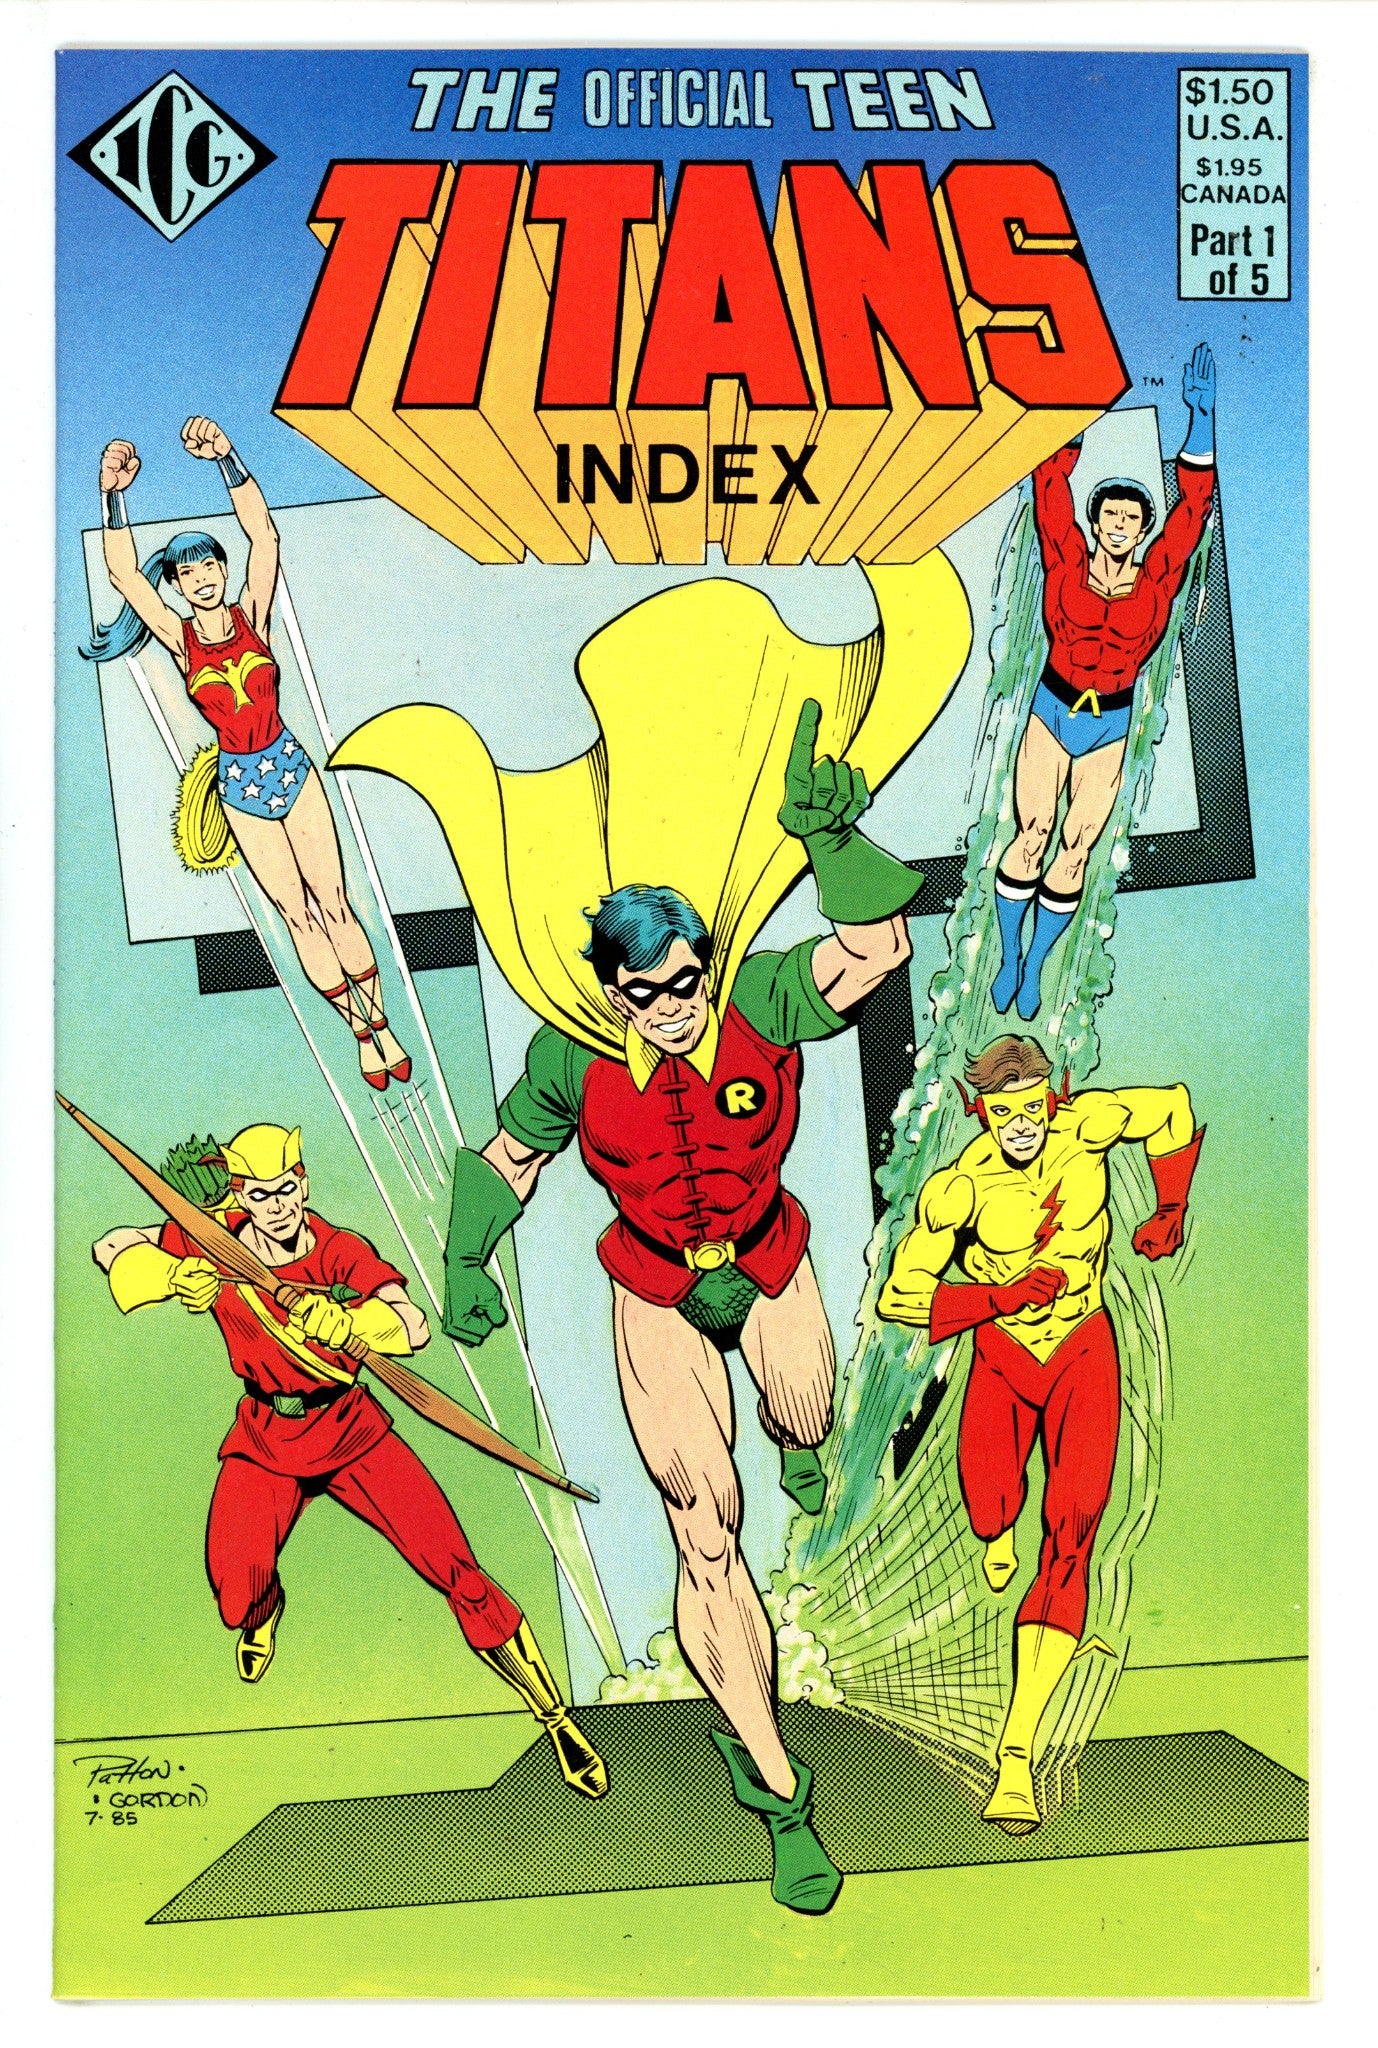 Official Teen Titans Index 1 (1985)